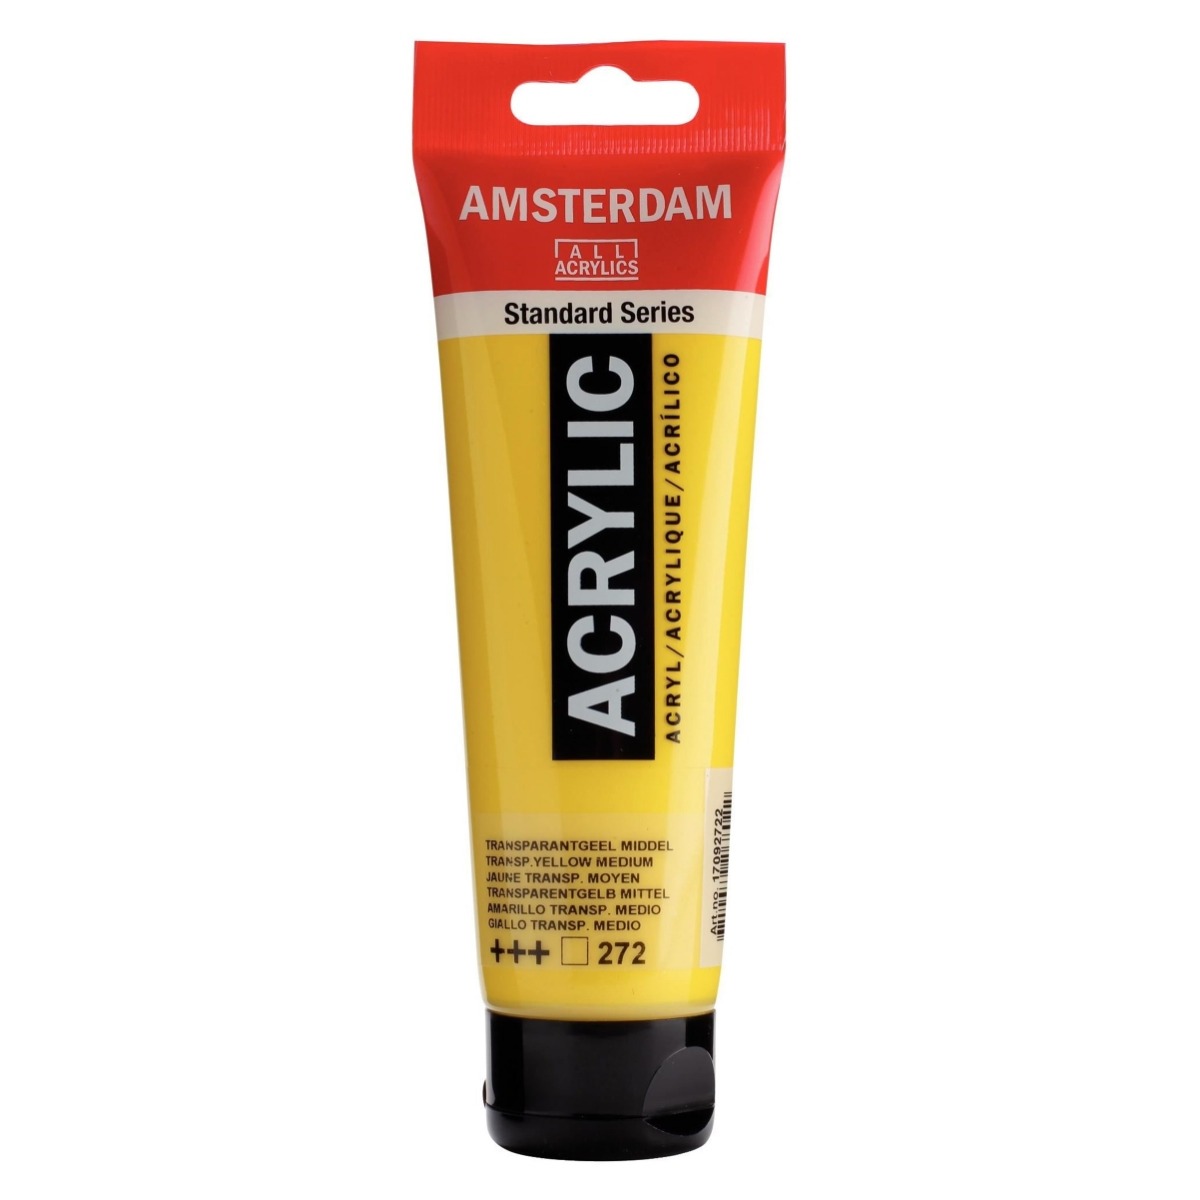 Acrilic Standard 120ml Amsterdam galben mediu transparent 17092722